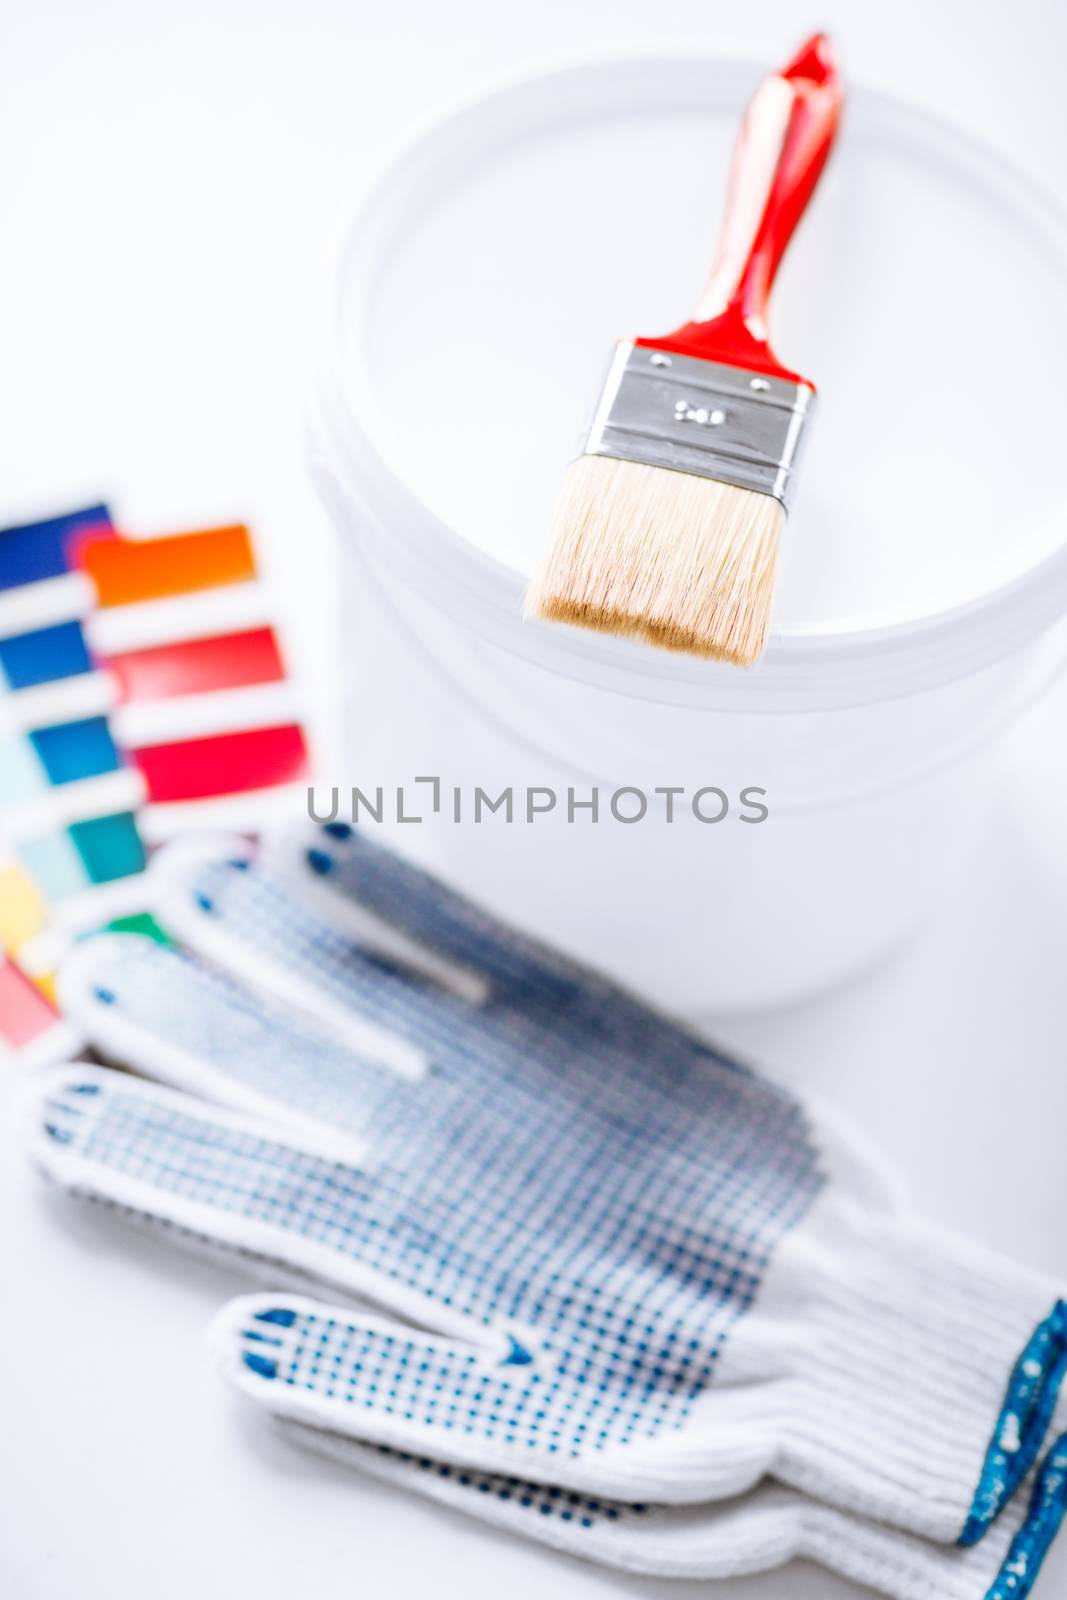 paintbrush, paint pot, gloves and pantone samples by dolgachov